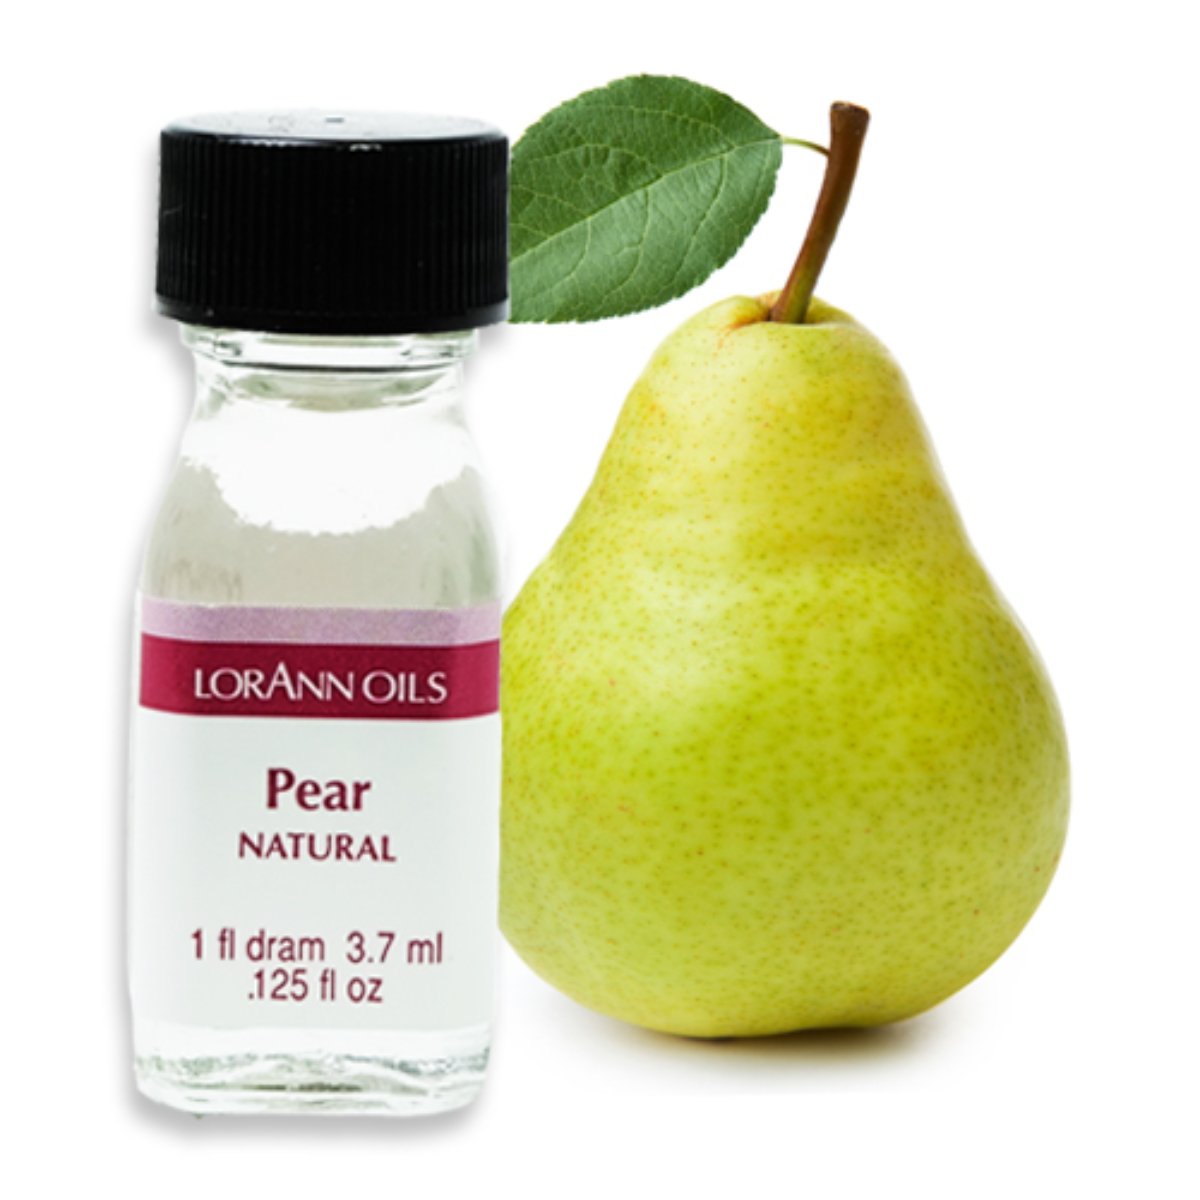 Pear, Natural Flavor 1 Dram - Bake Supply Plus